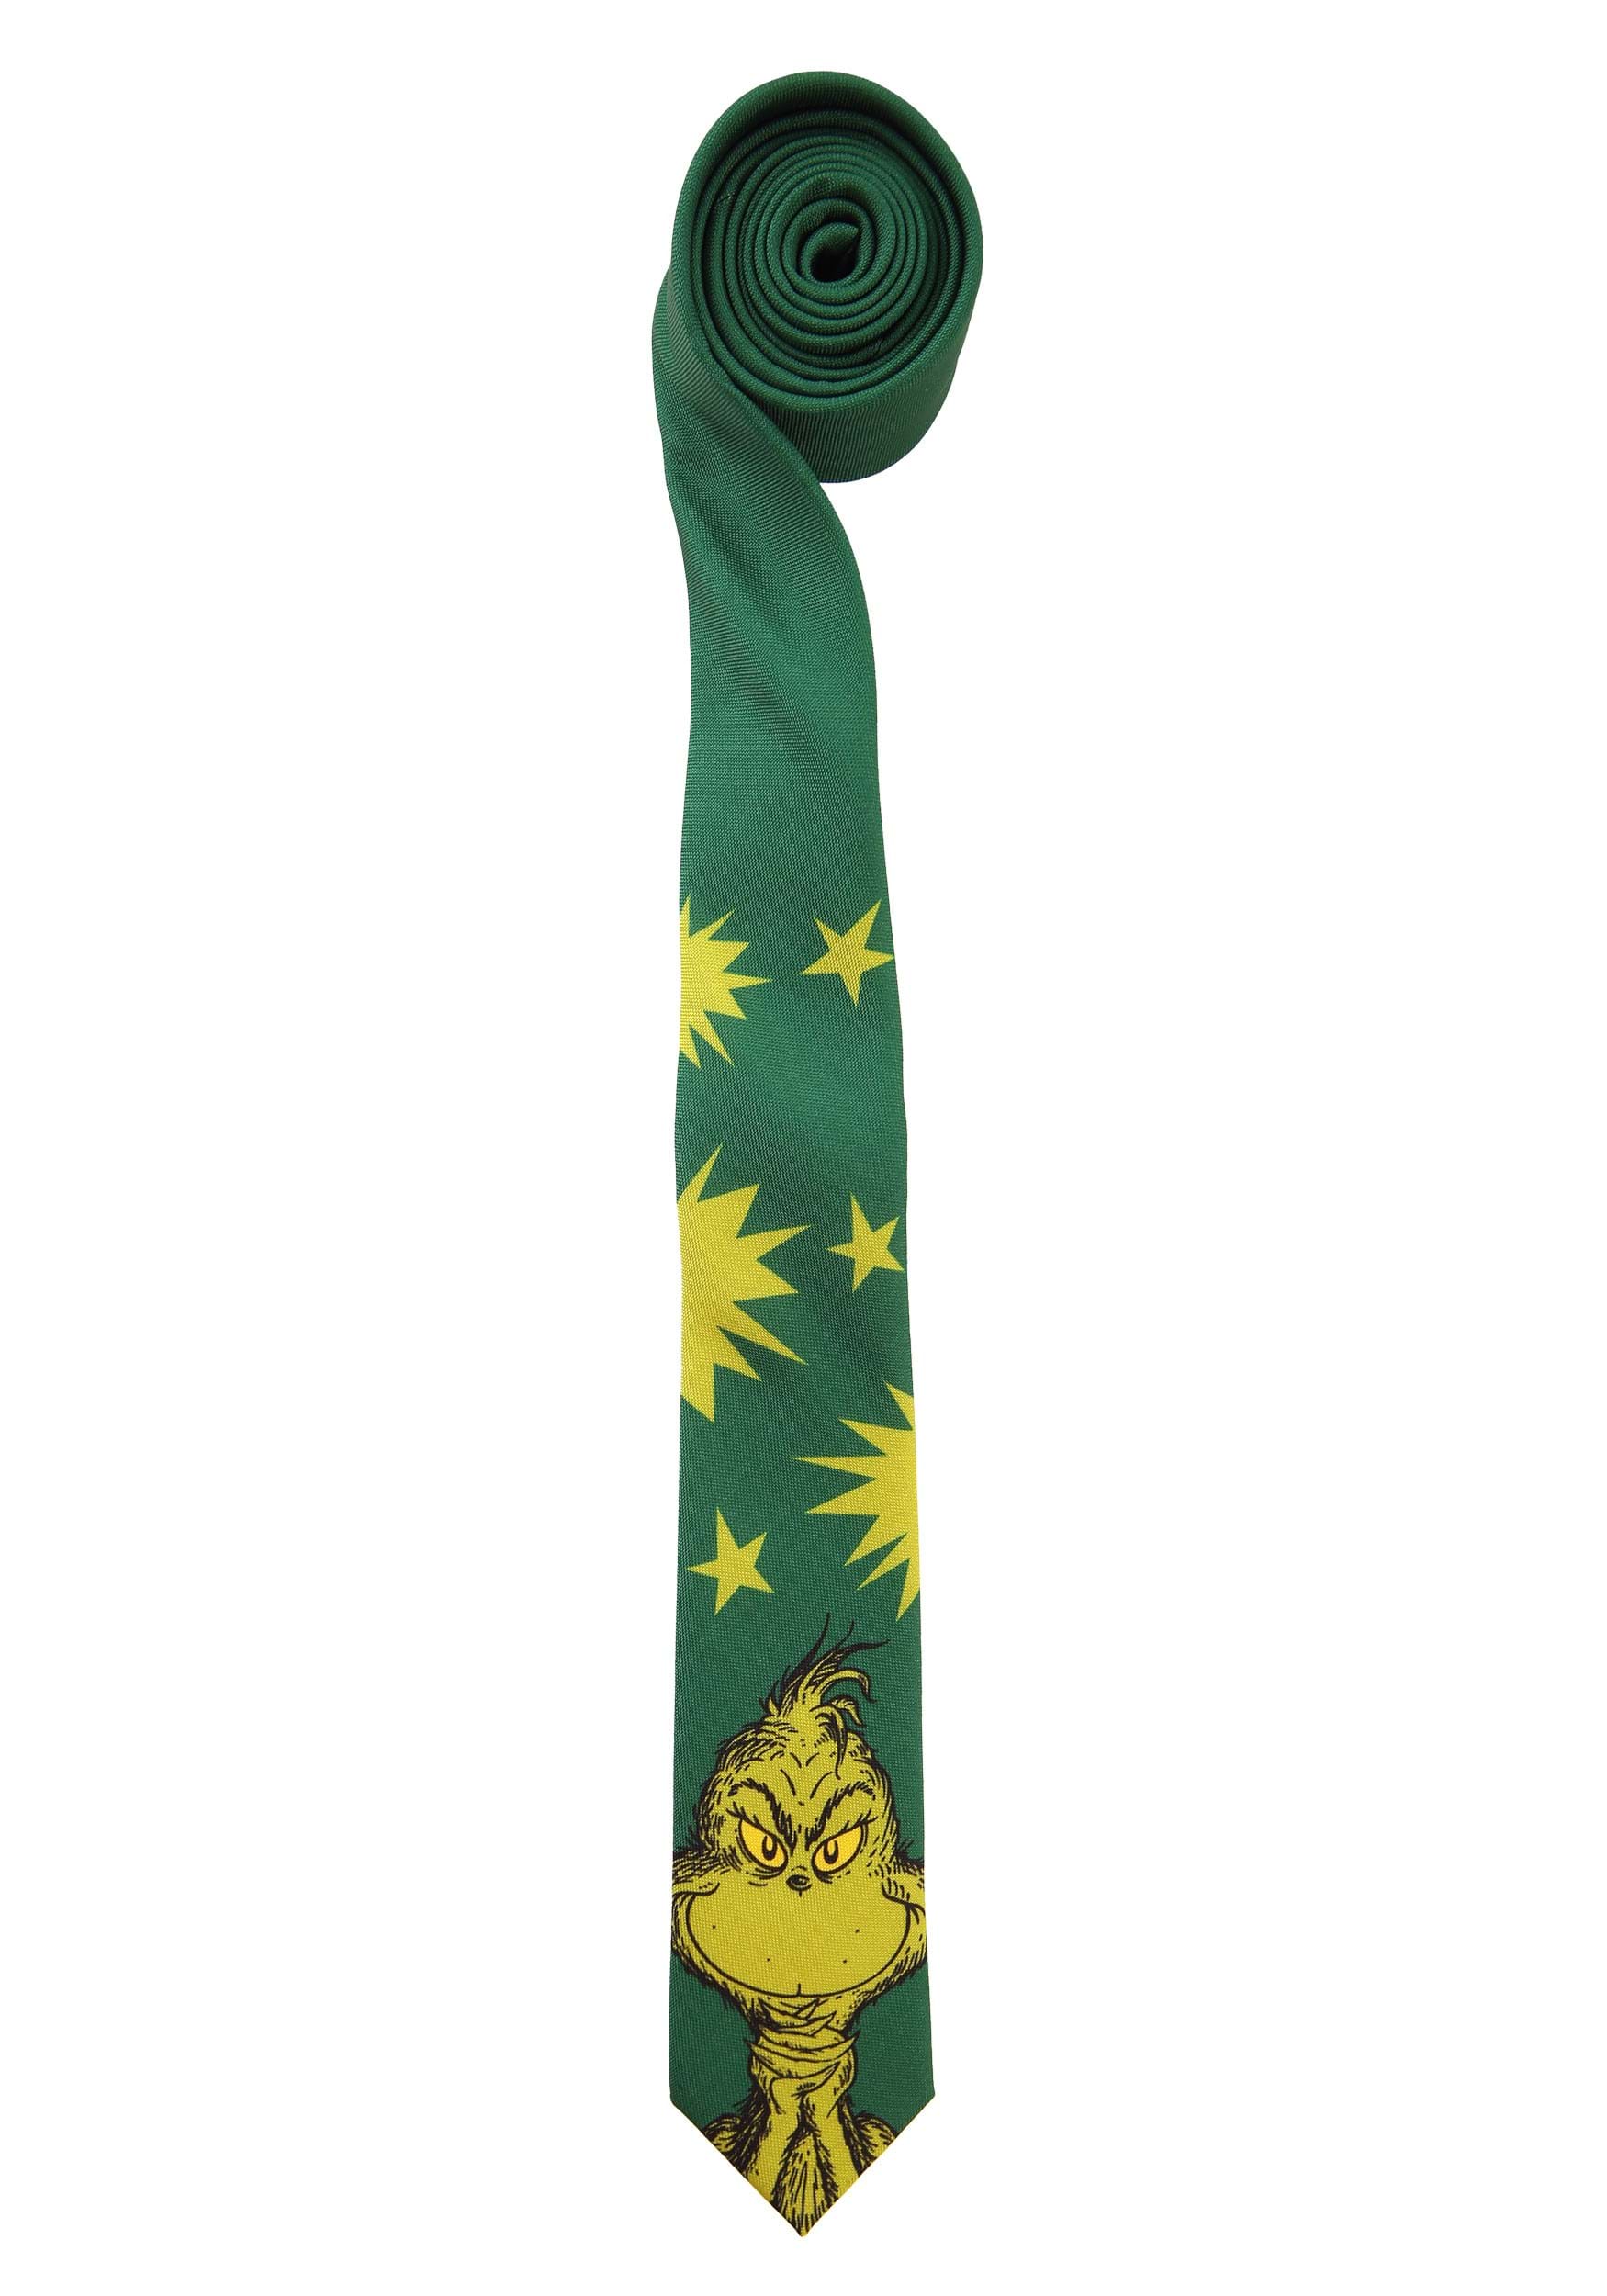 The Grinch Character Necktie